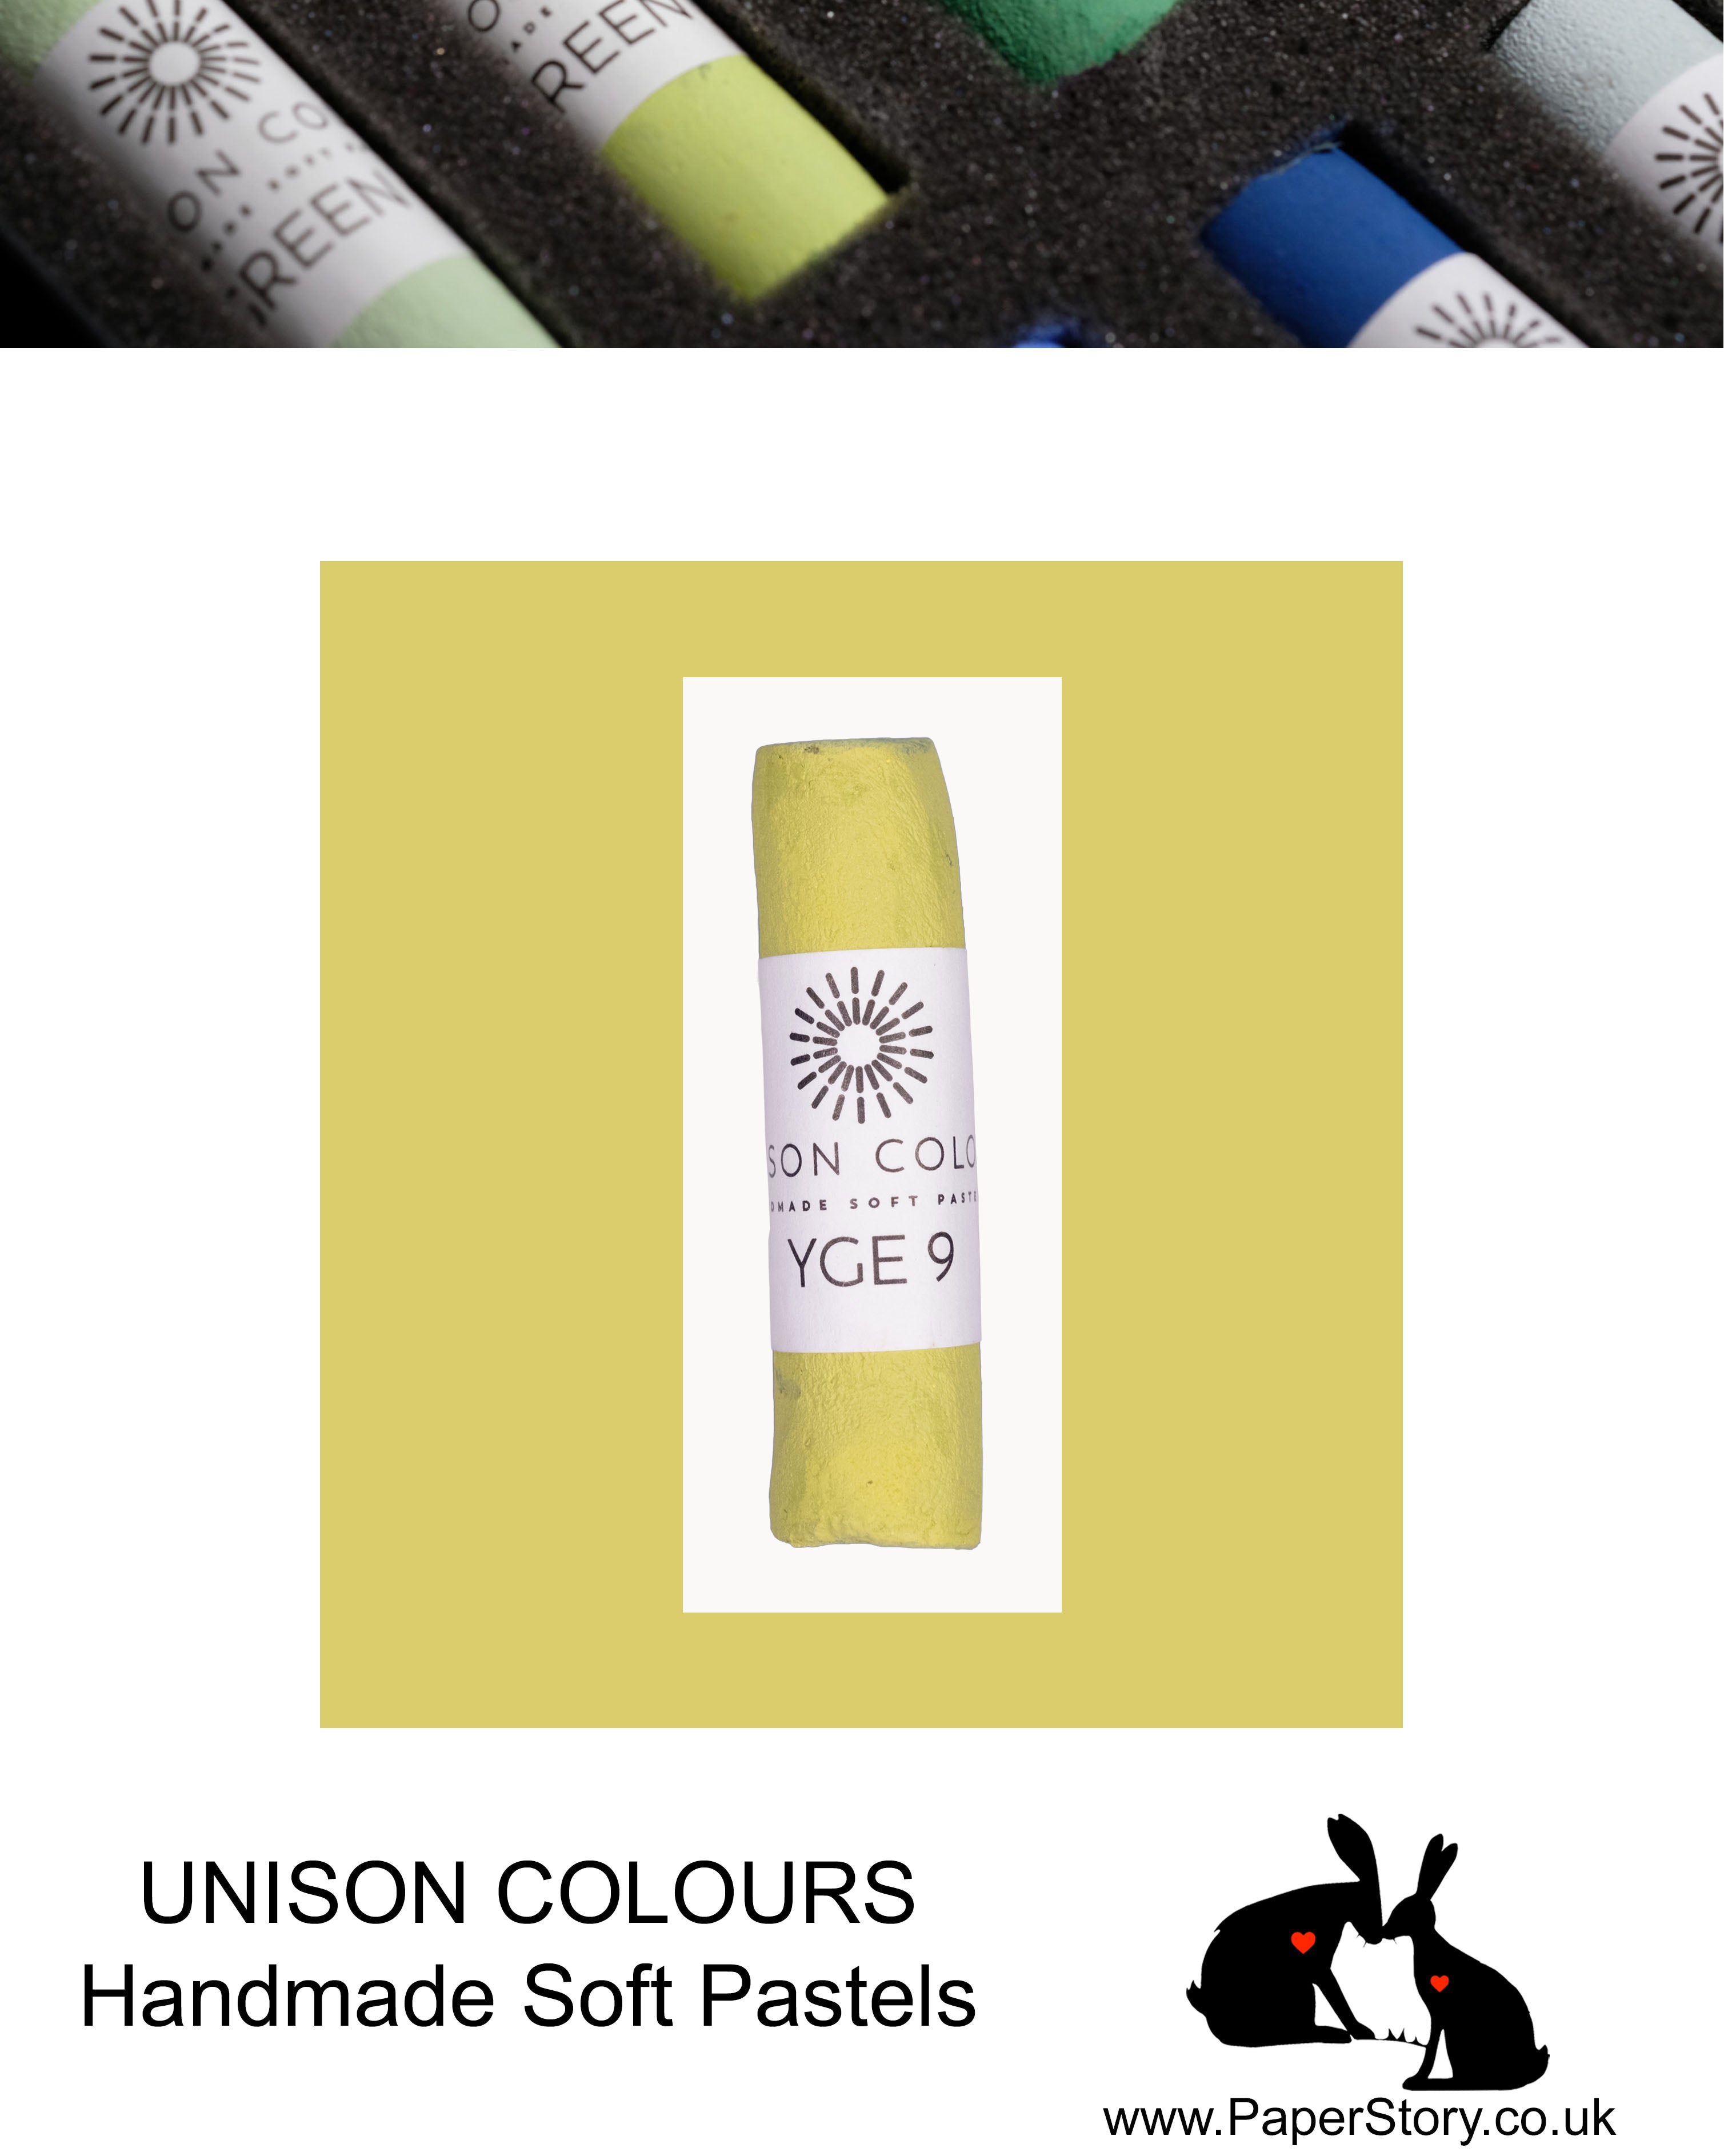 Unison Colour Handmade Soft Pastels Yellow Green Earth 9 - Size Regular